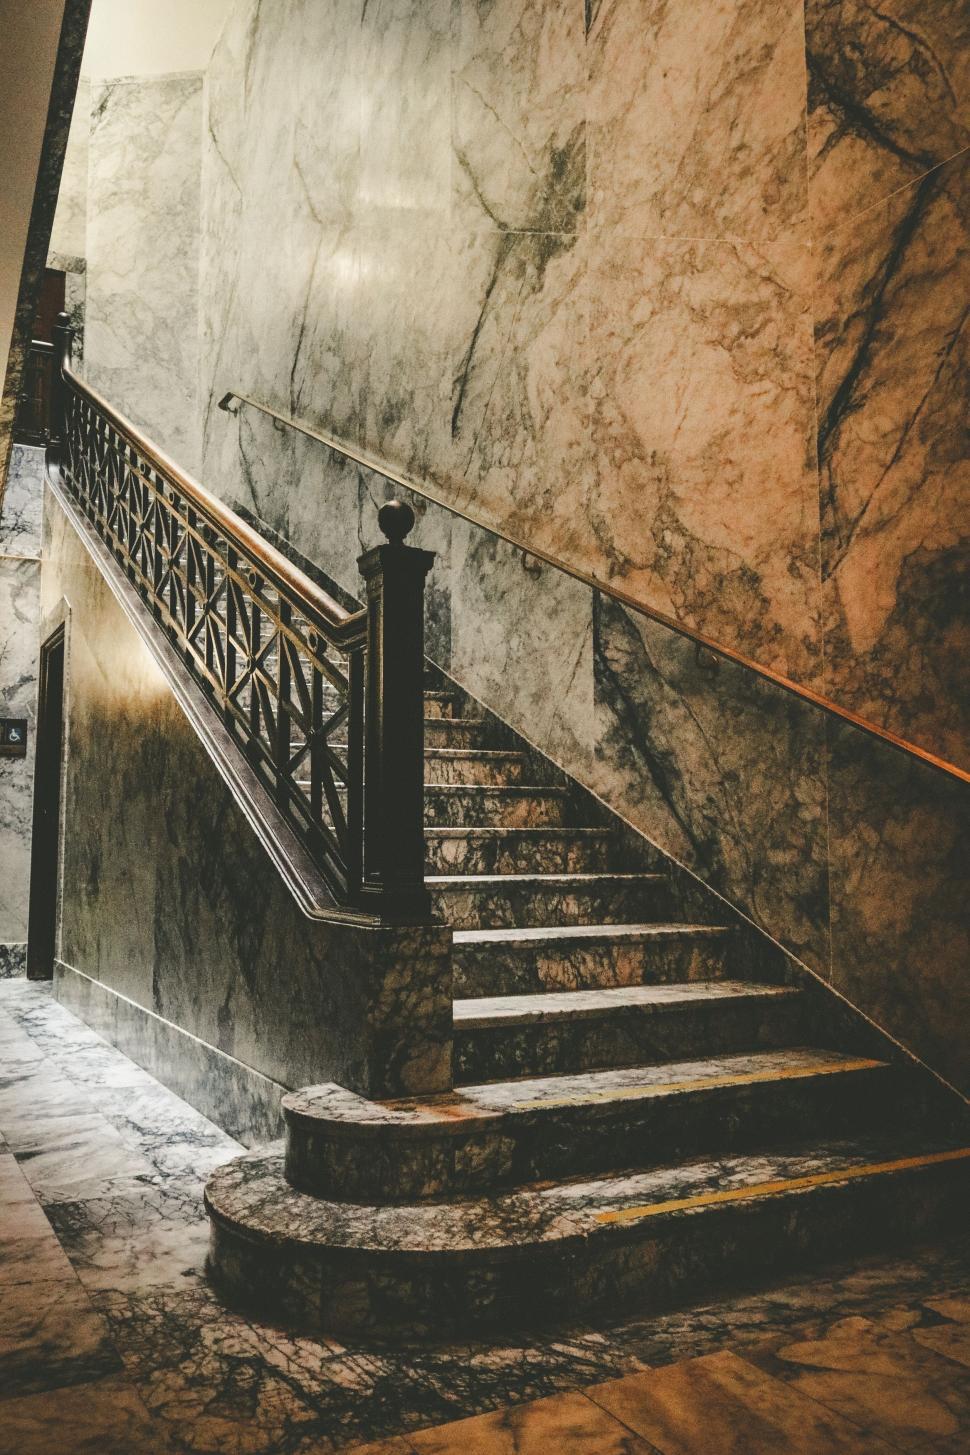 Free Image of Stairway - Washington State Capitol 